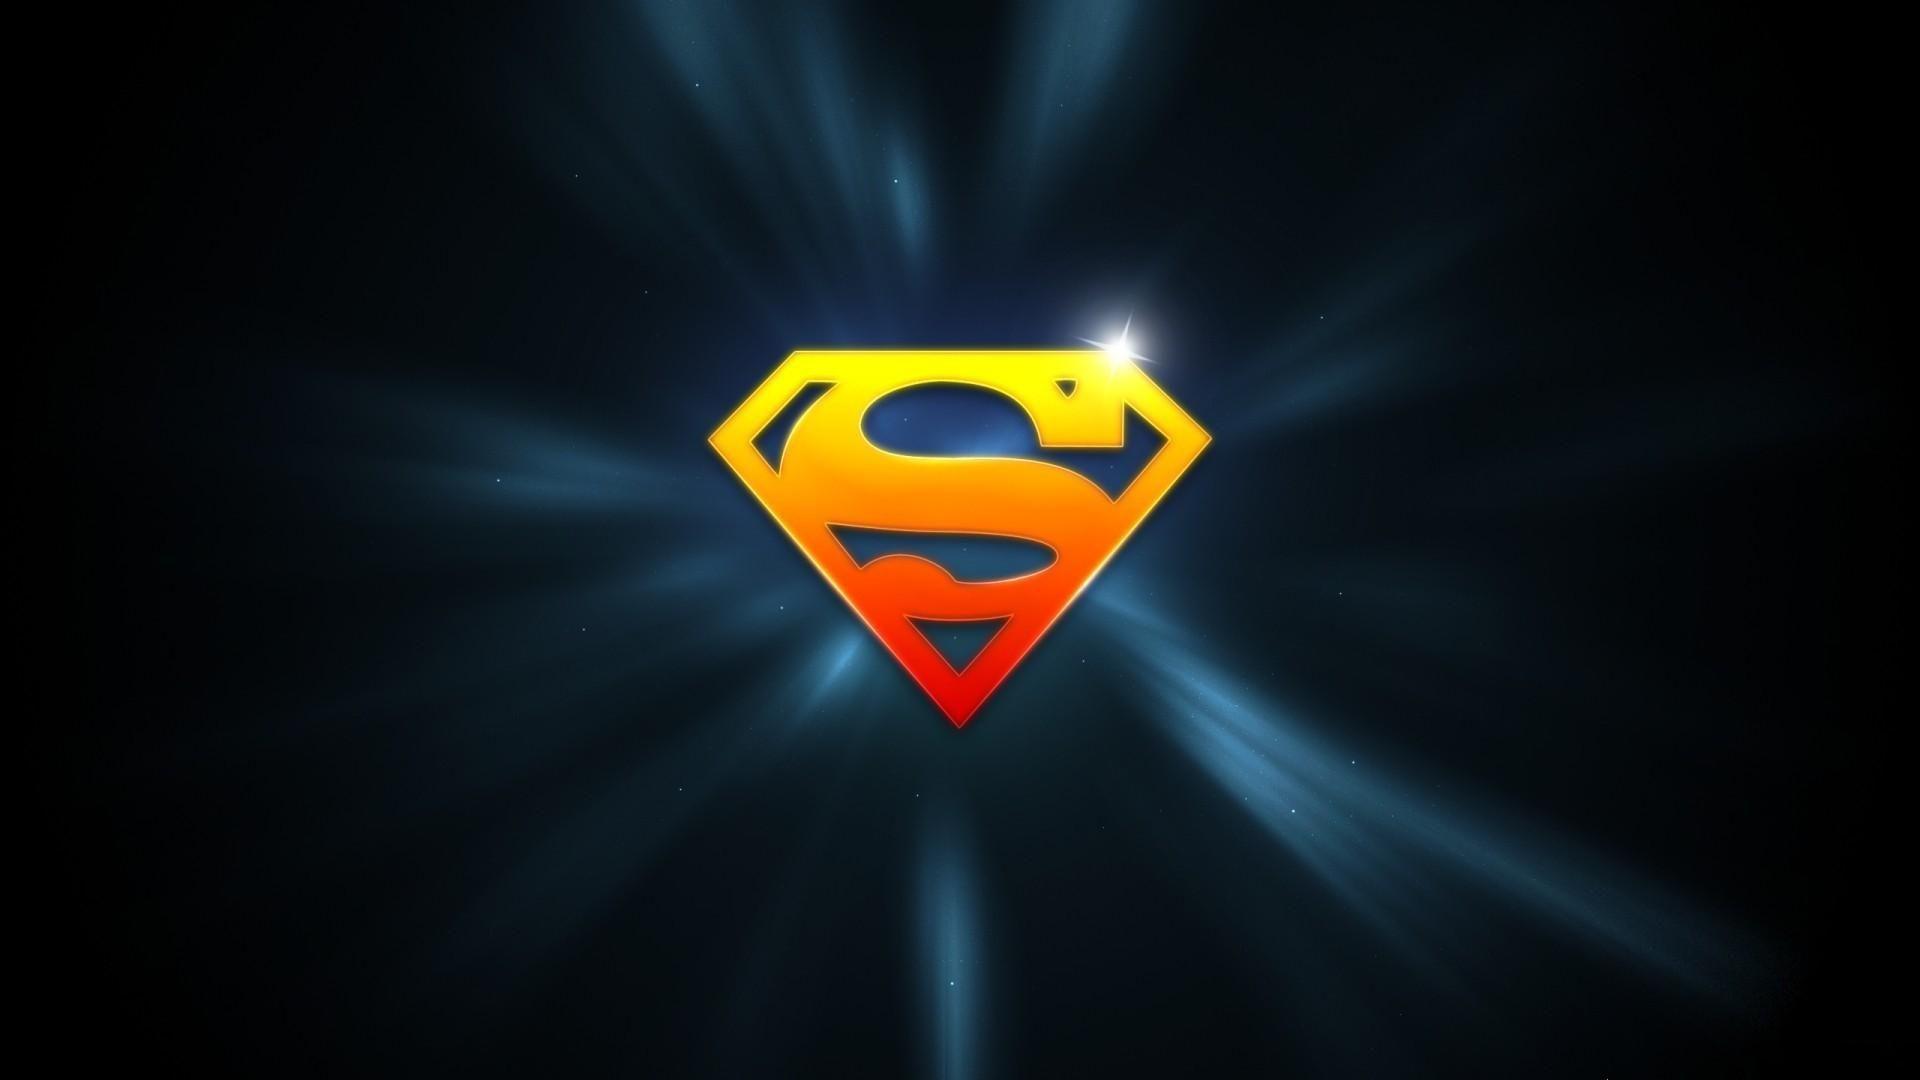 Cool Hero Logo - wallpaper.wiki-Superman-Logo-Ipad-Pictures-HD-PIC-WPE009096 ...